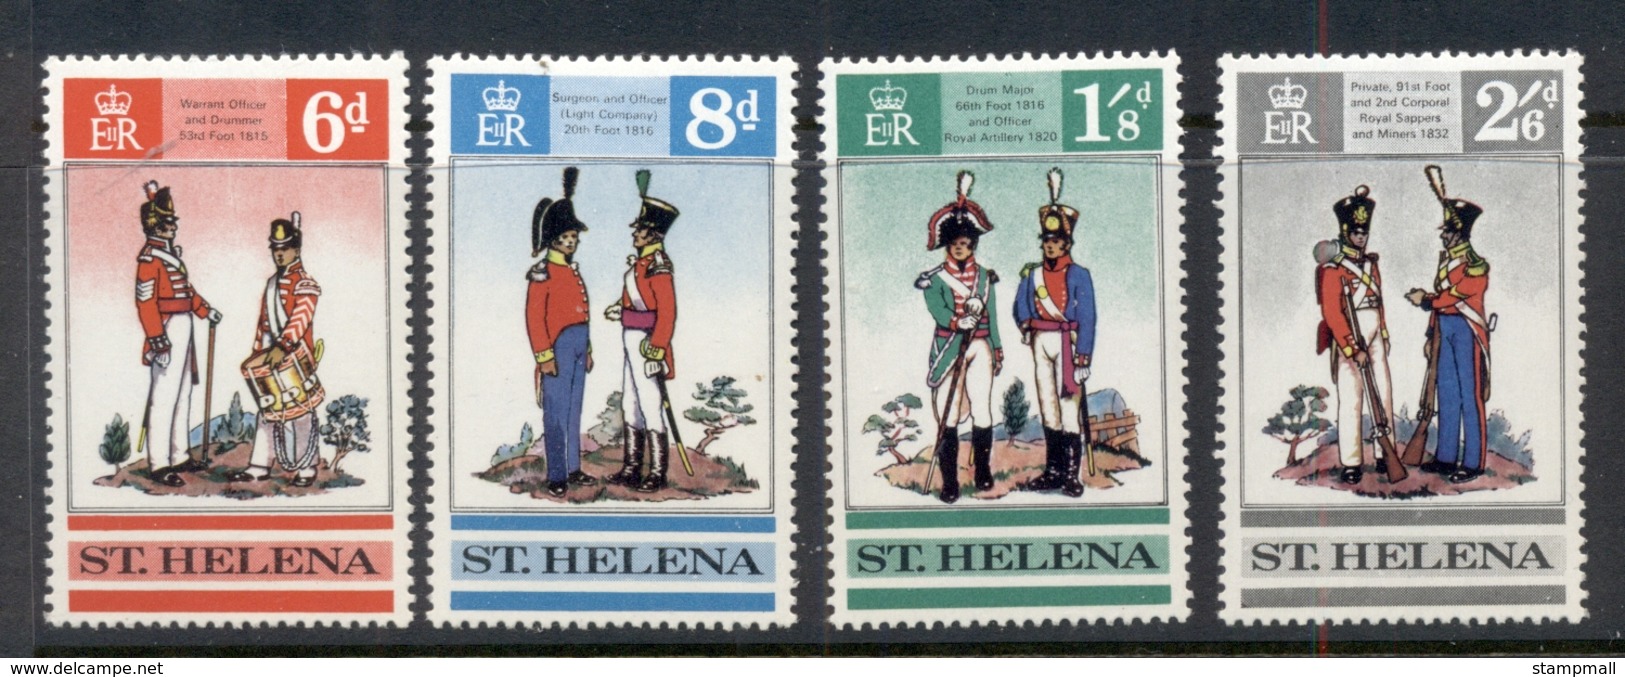 St Helena 1969 British Uniforms MUH - Saint Helena Island